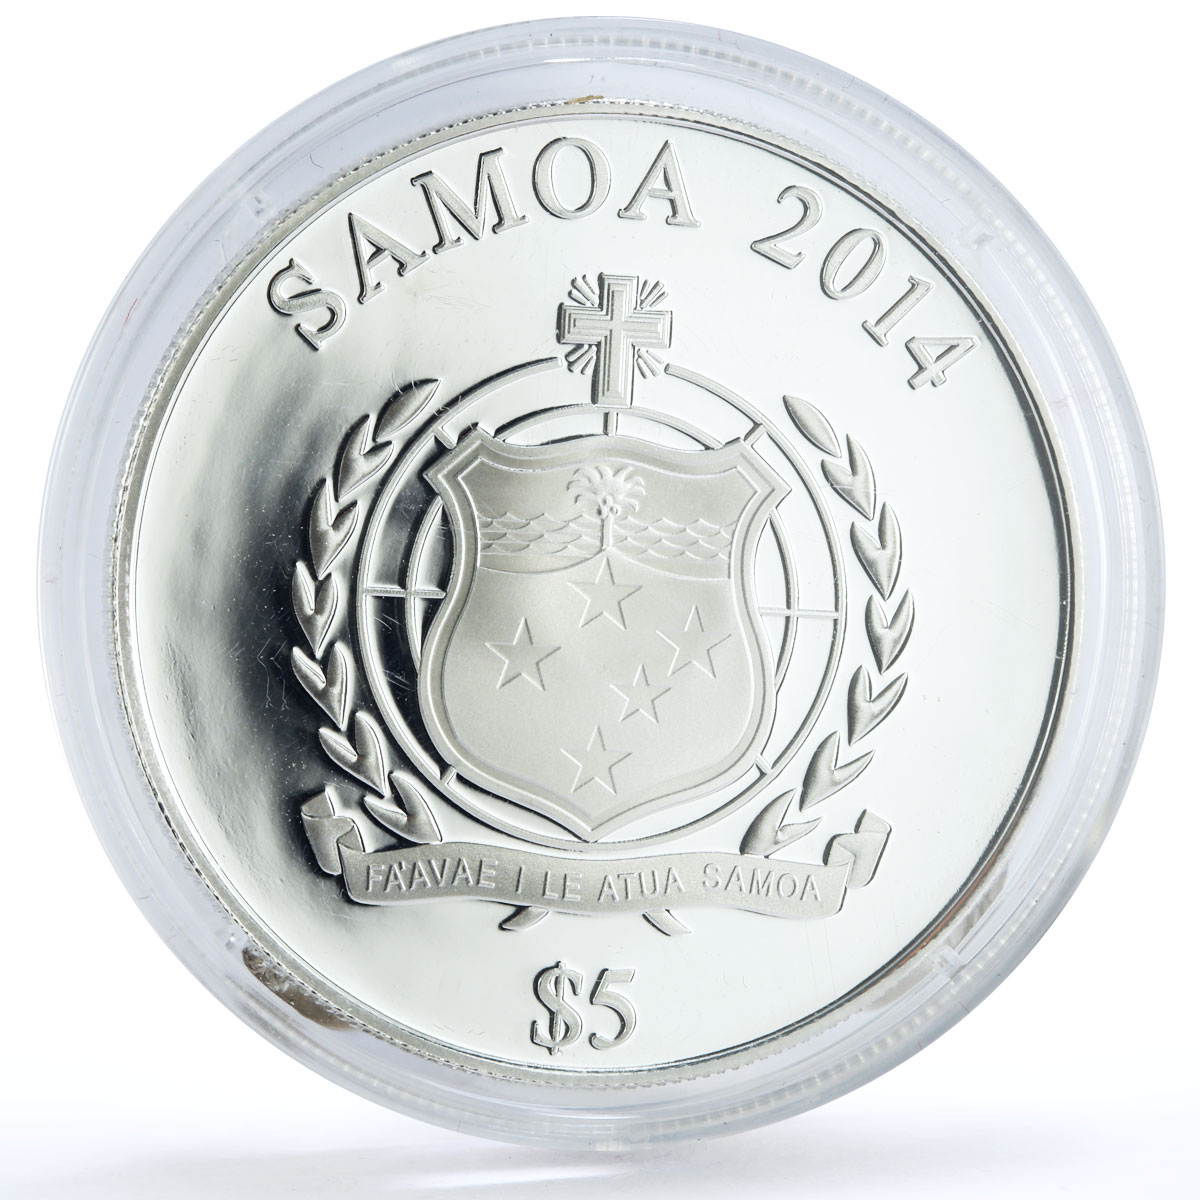 Samoa 5 dollars Trains Railways Steam Locomotive Beuth proof silver coin 2014